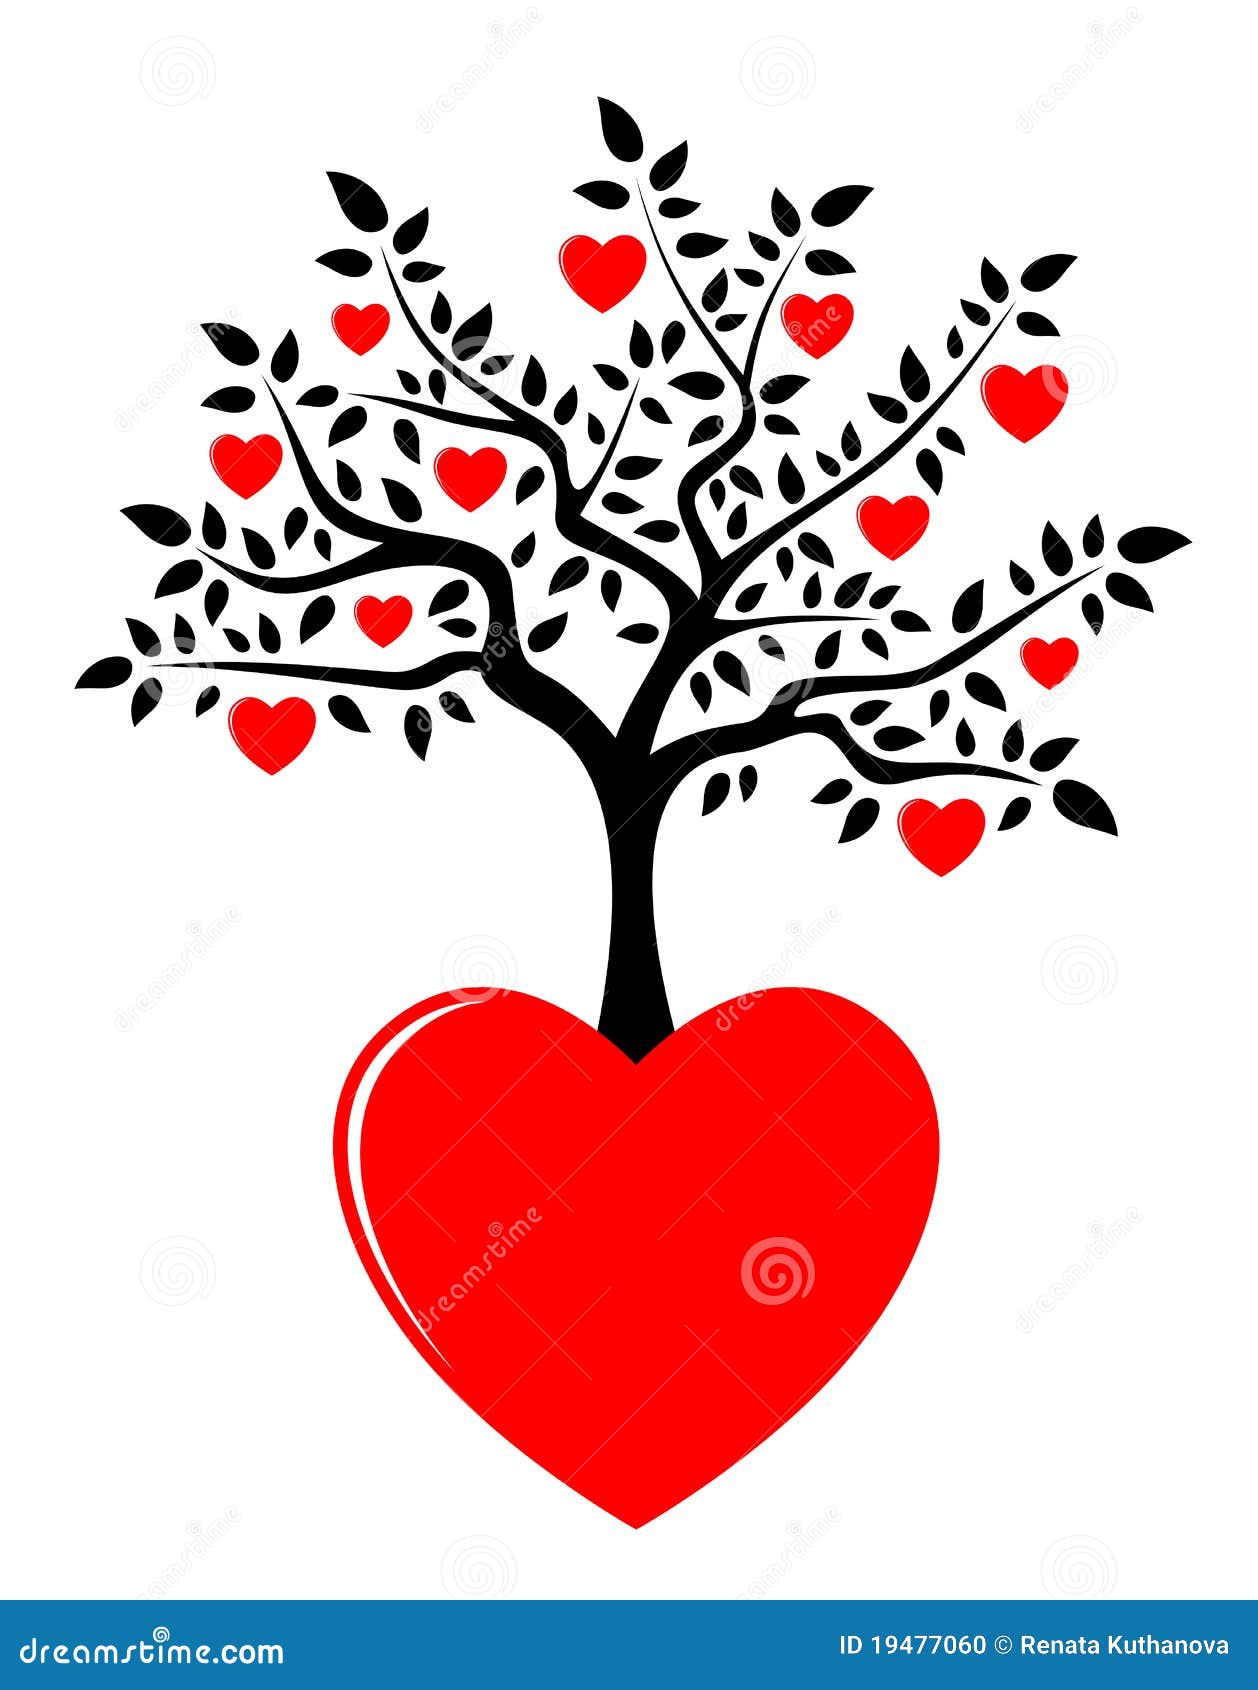 clipart tree with hearts - photo #49